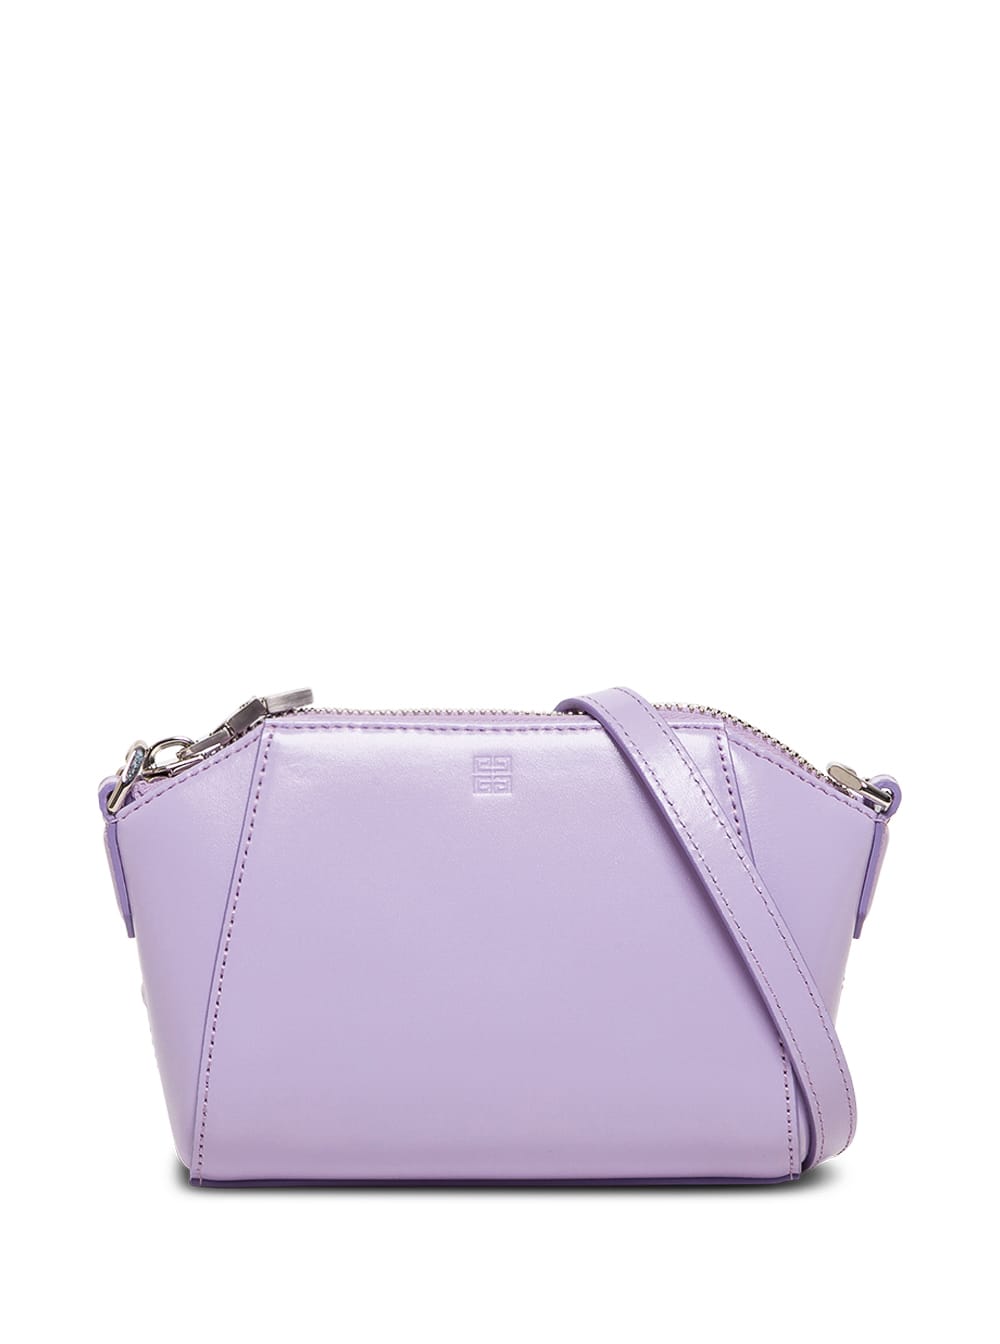 Givenchy Antigona Nano Crossbody Bag In Lilac Leather